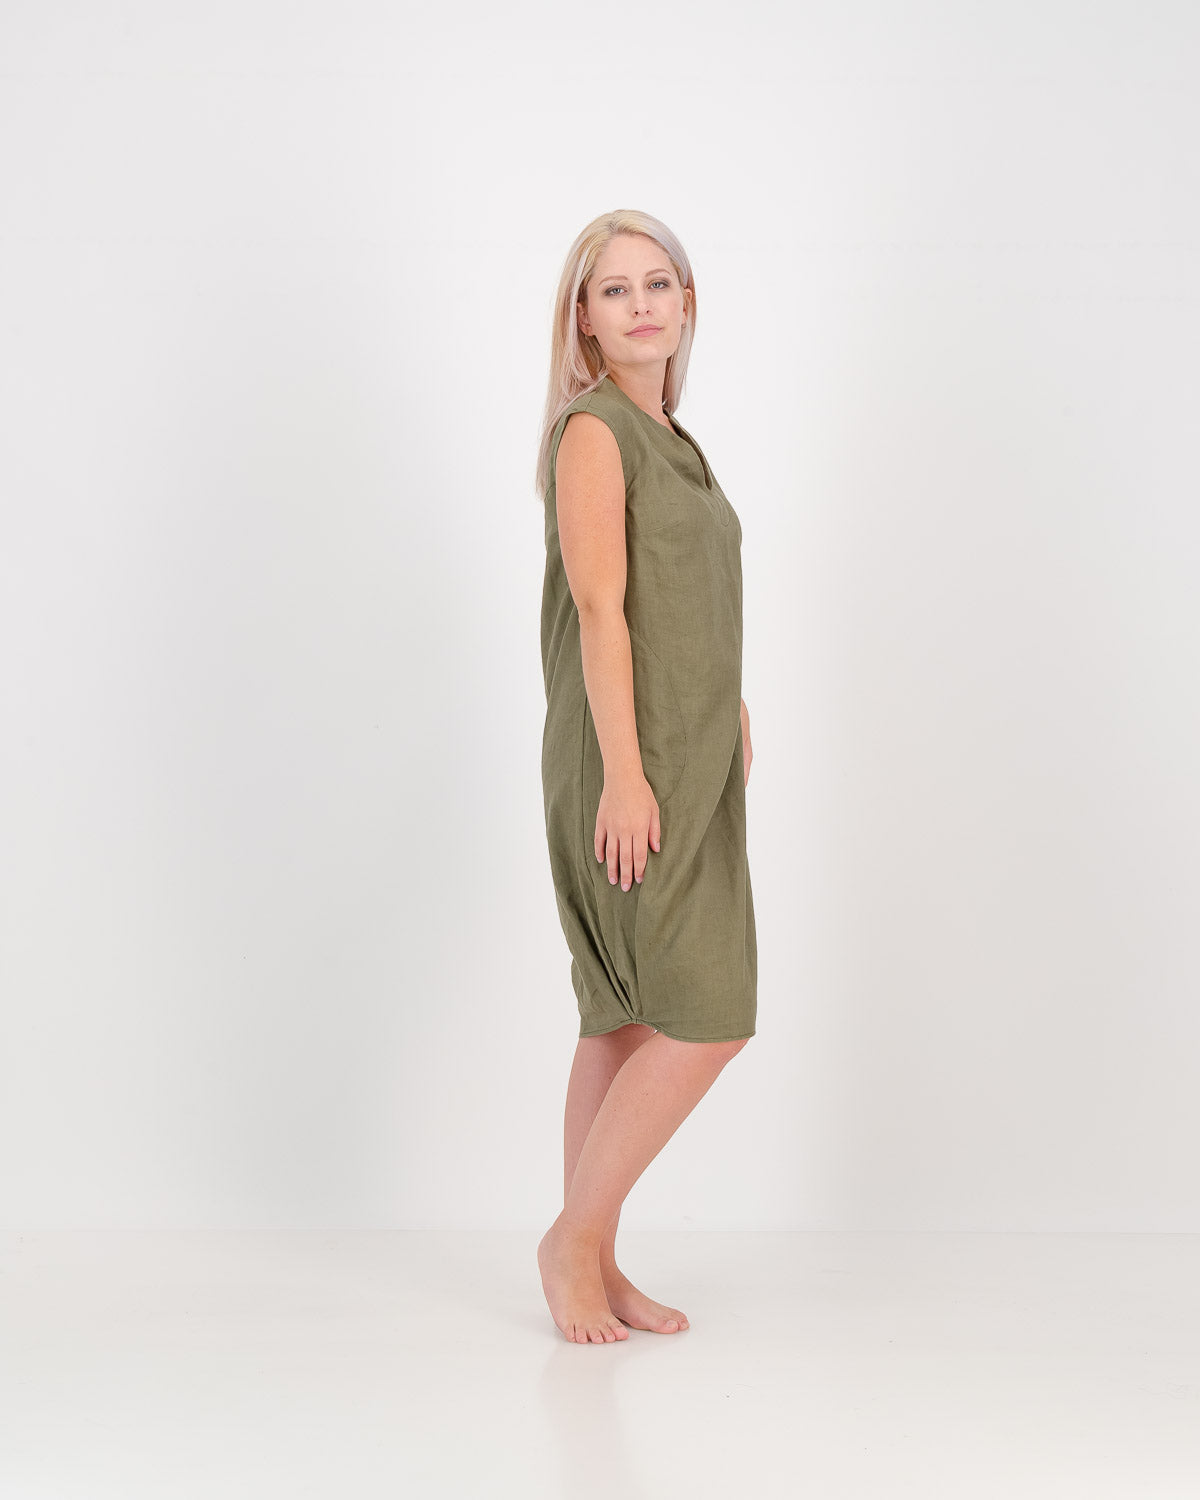 LUNAR clothing, olive steph dress, eco fashion, sustainable